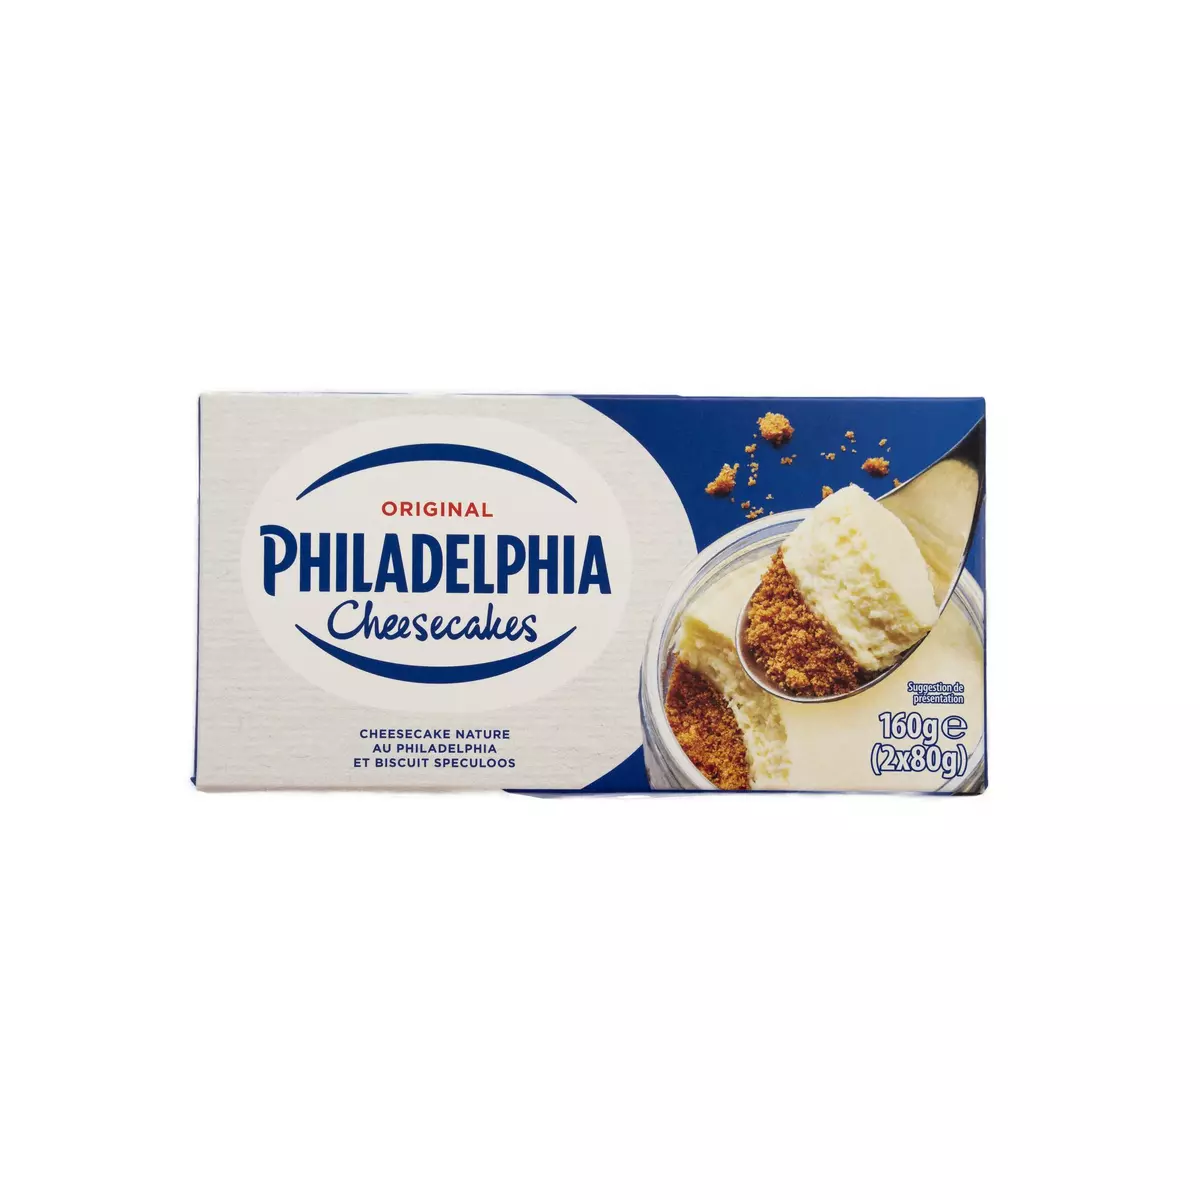 PHILADELPHIA Cheesecake nature et biscuit spéculoos 2x80g